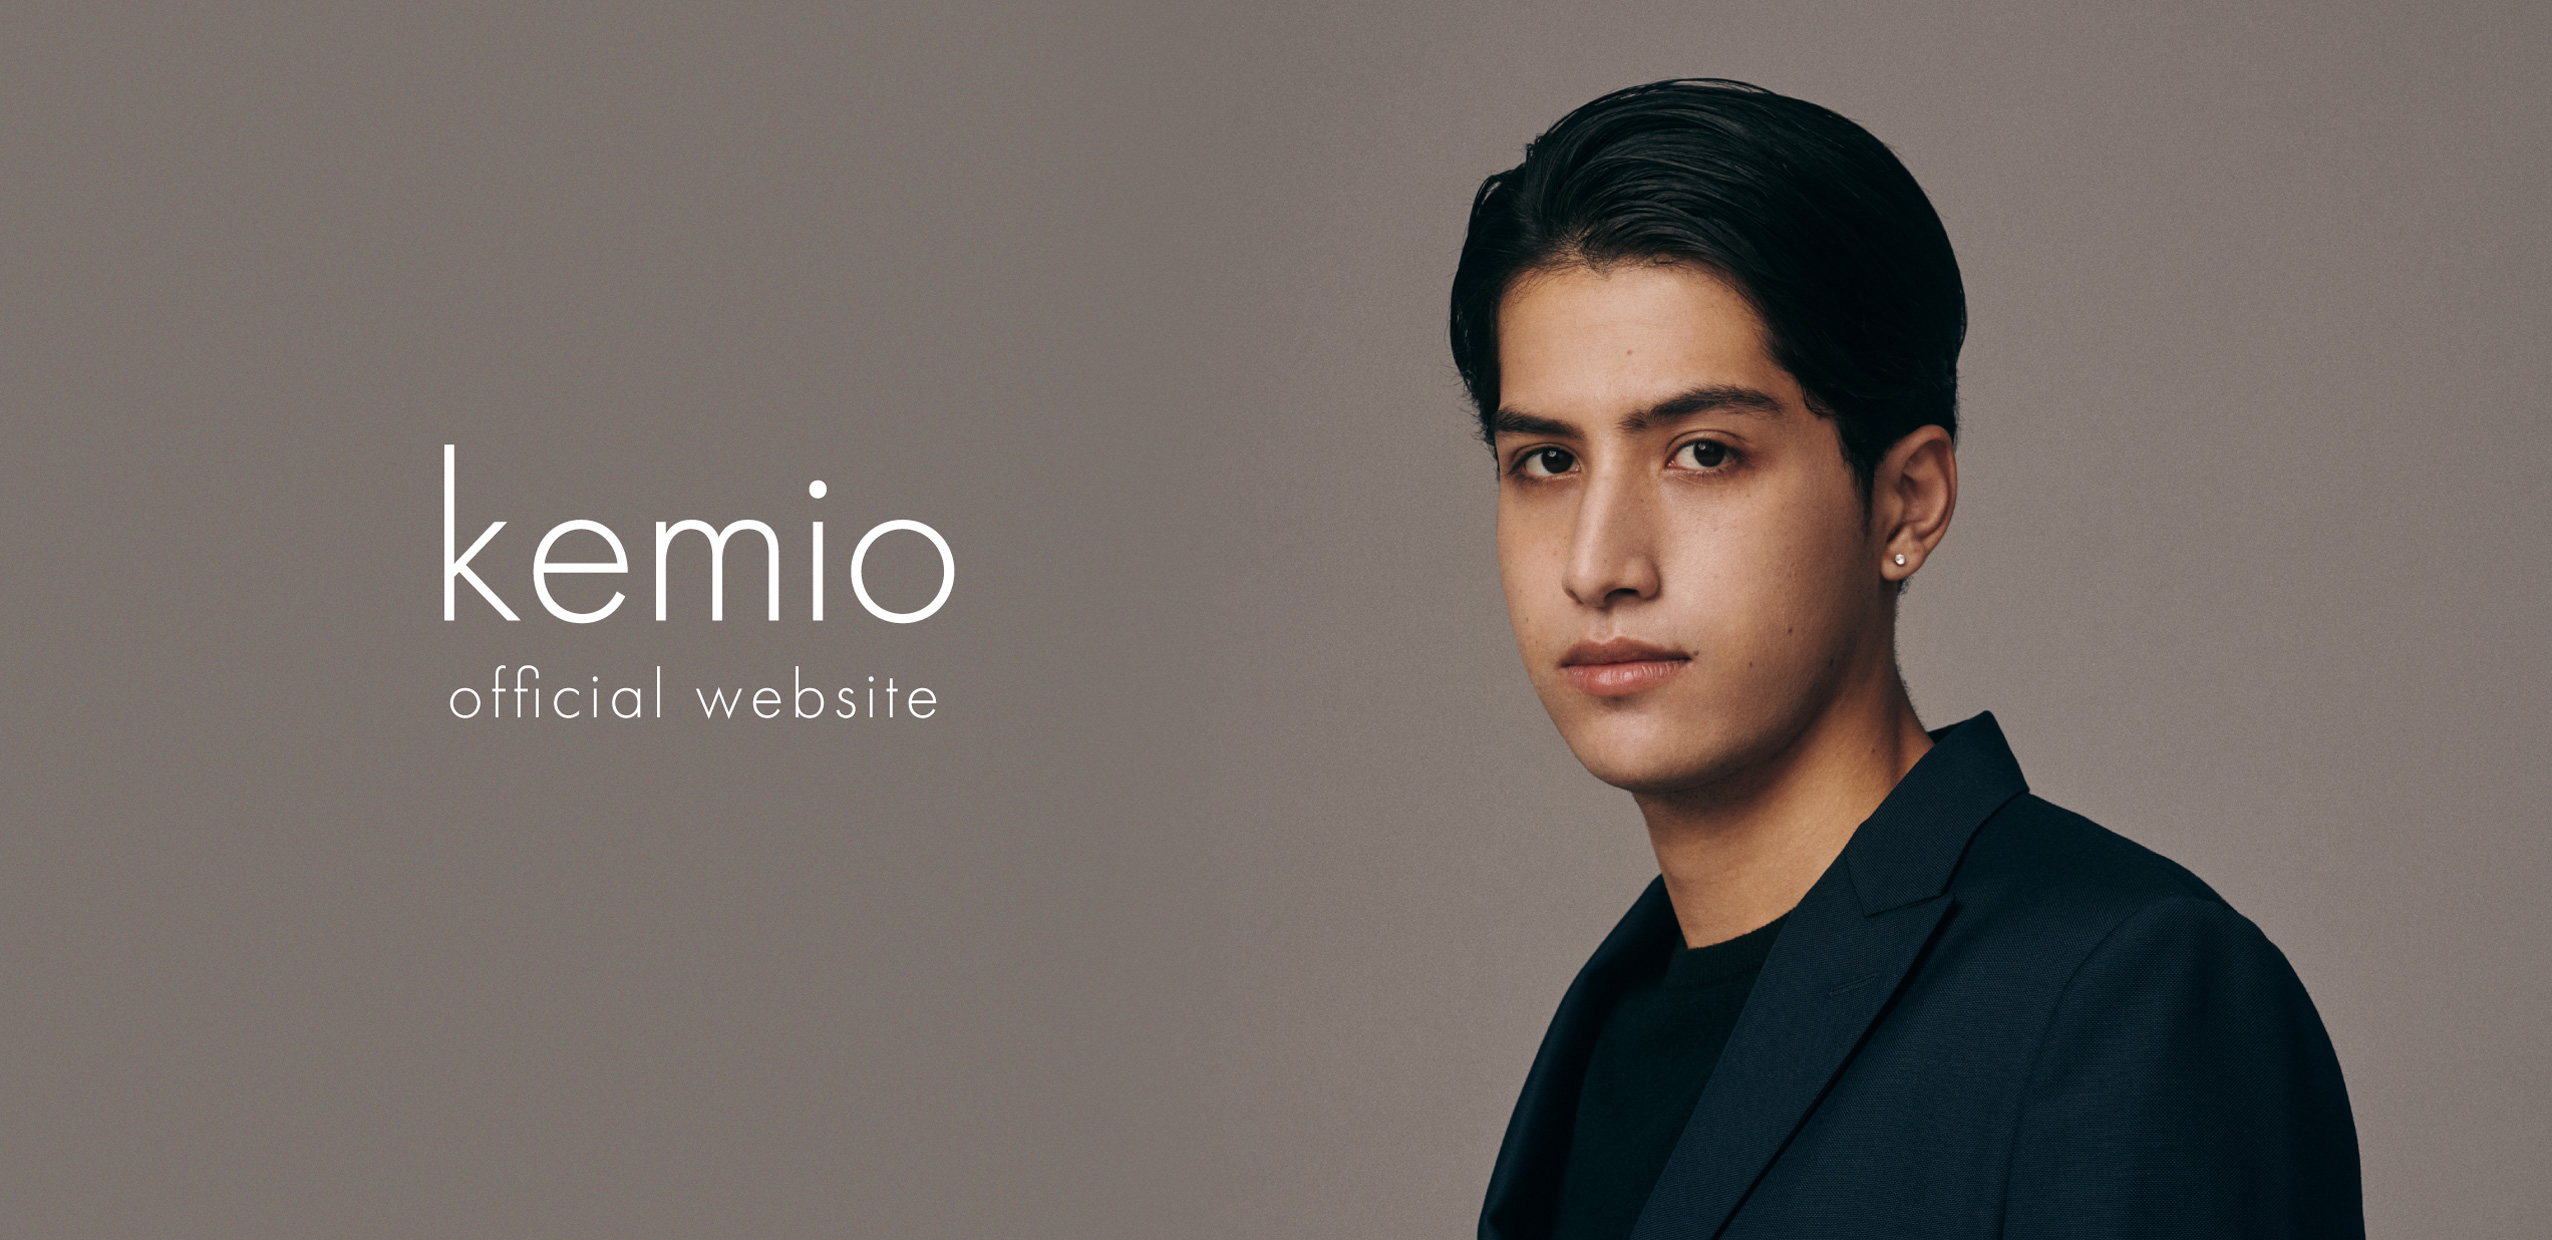 kemio official website